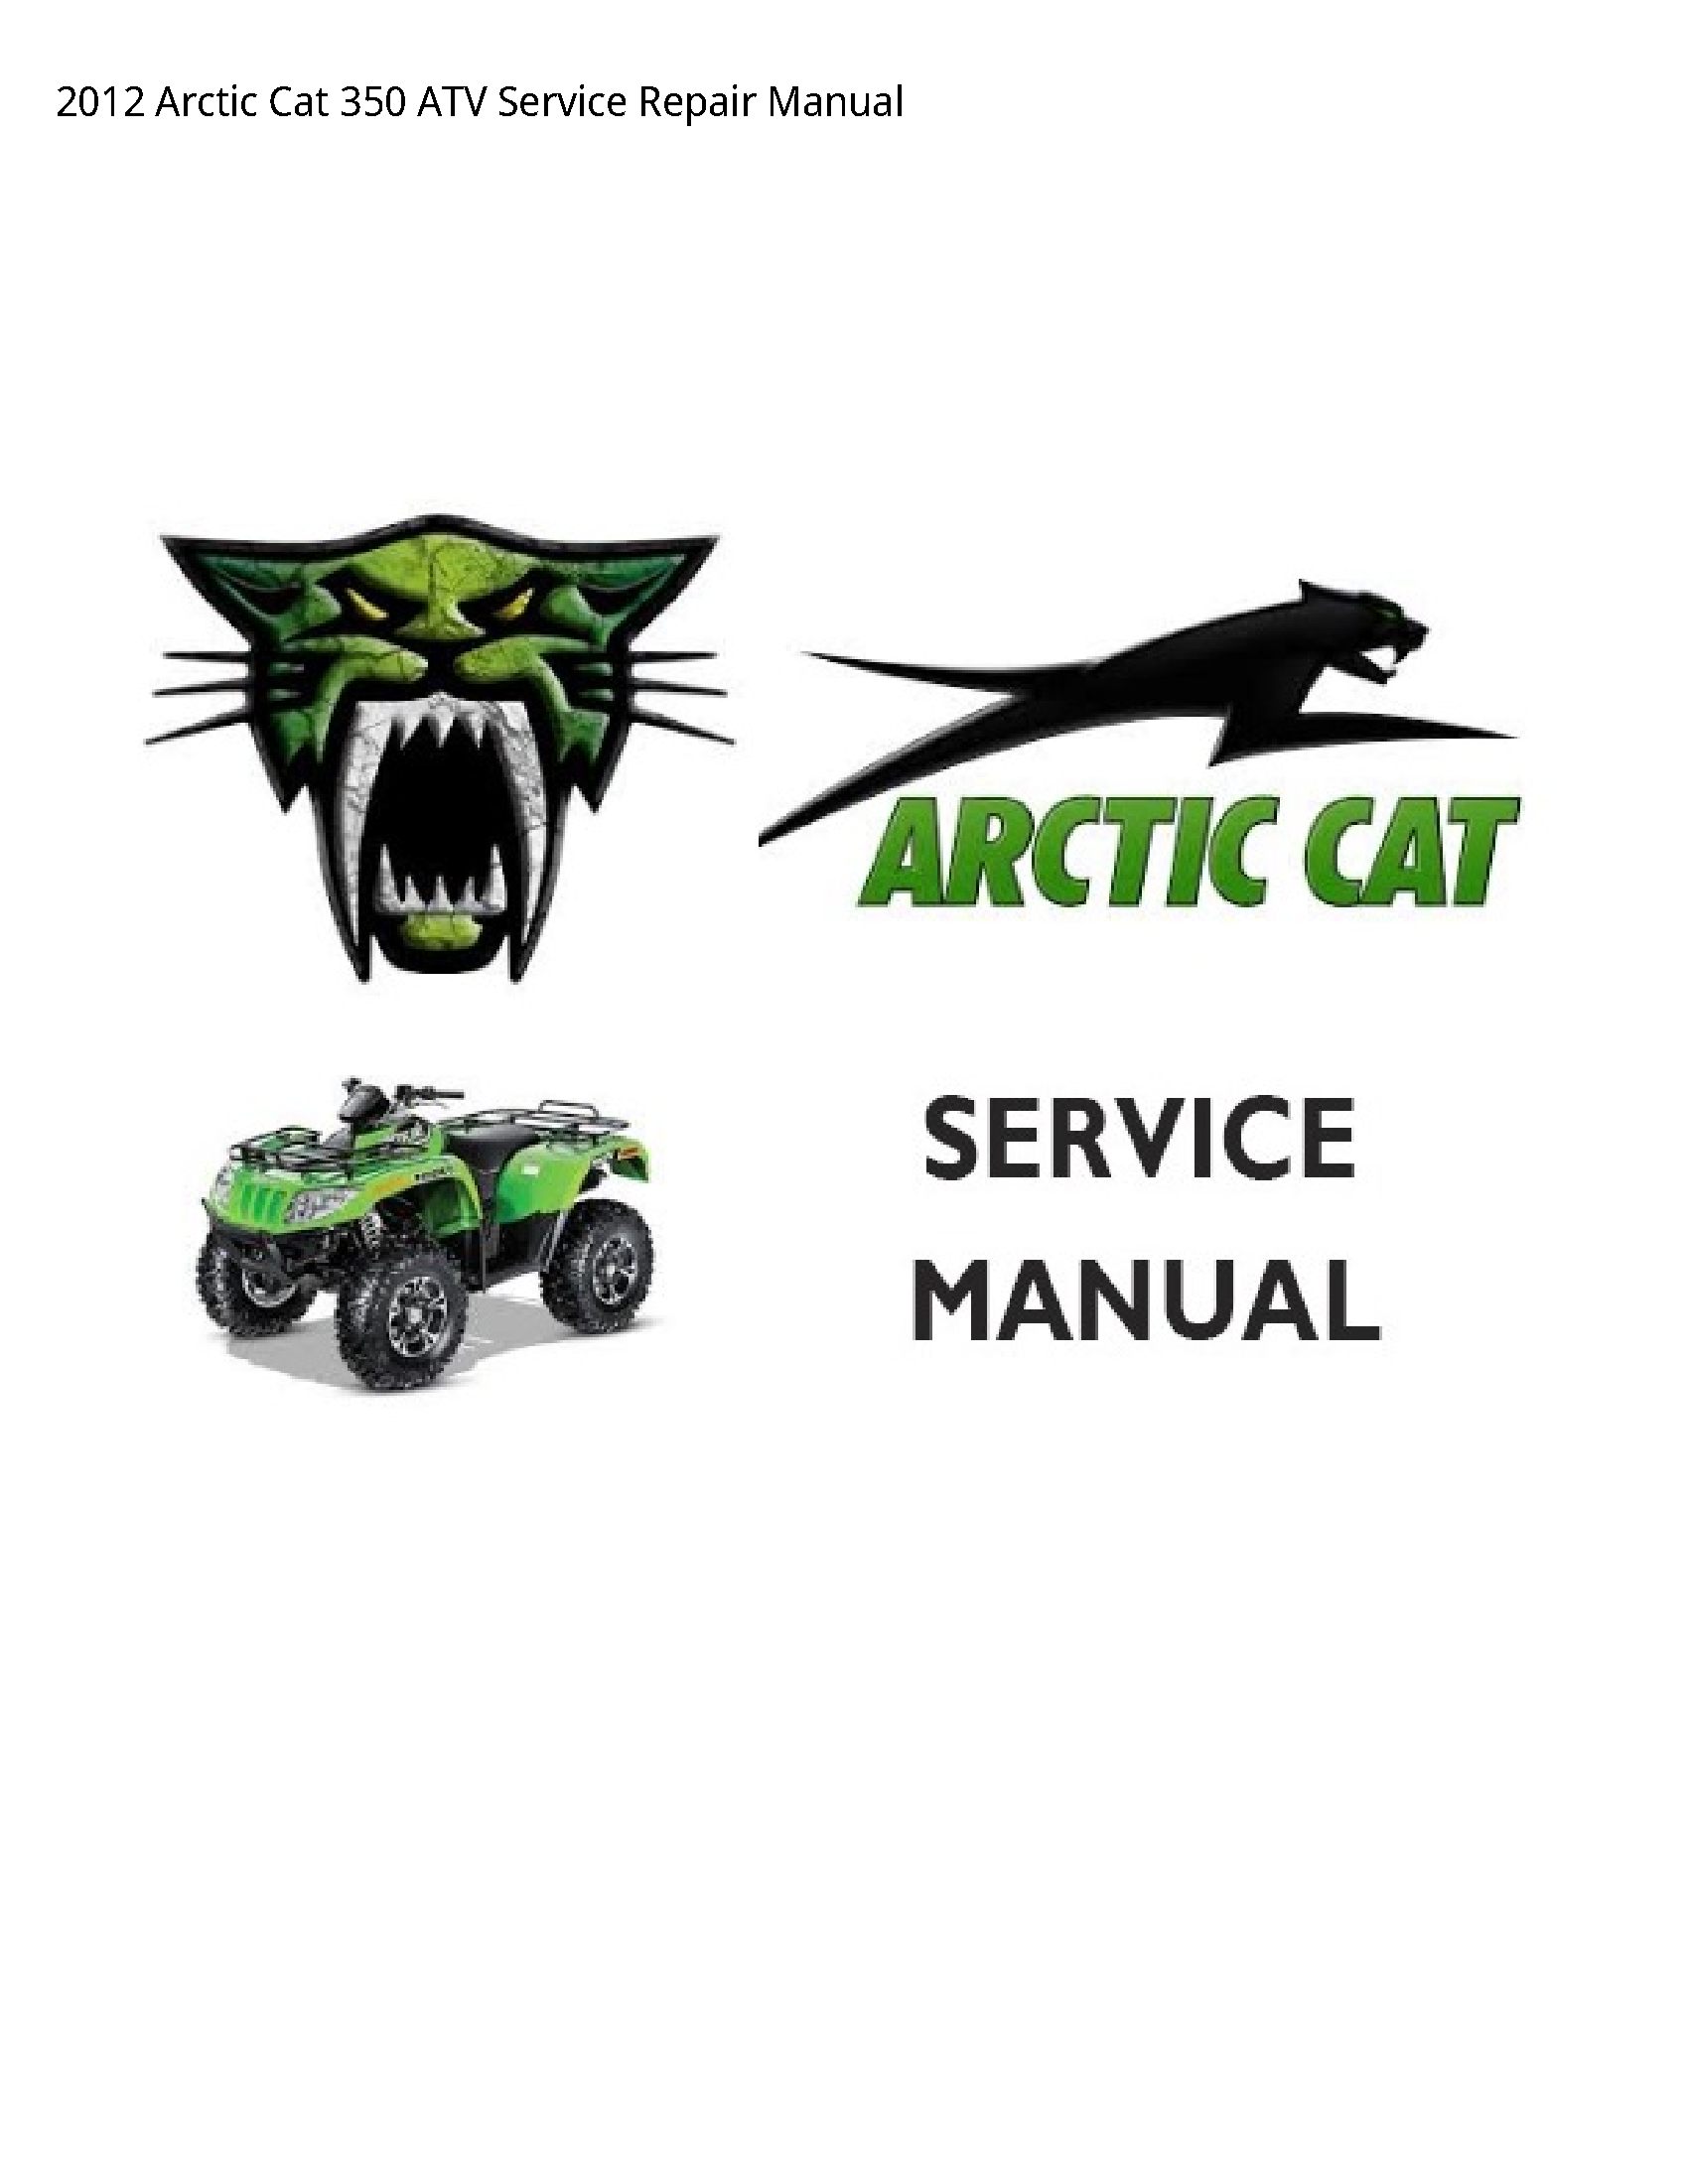 Arctic Cat 350 ATV manual